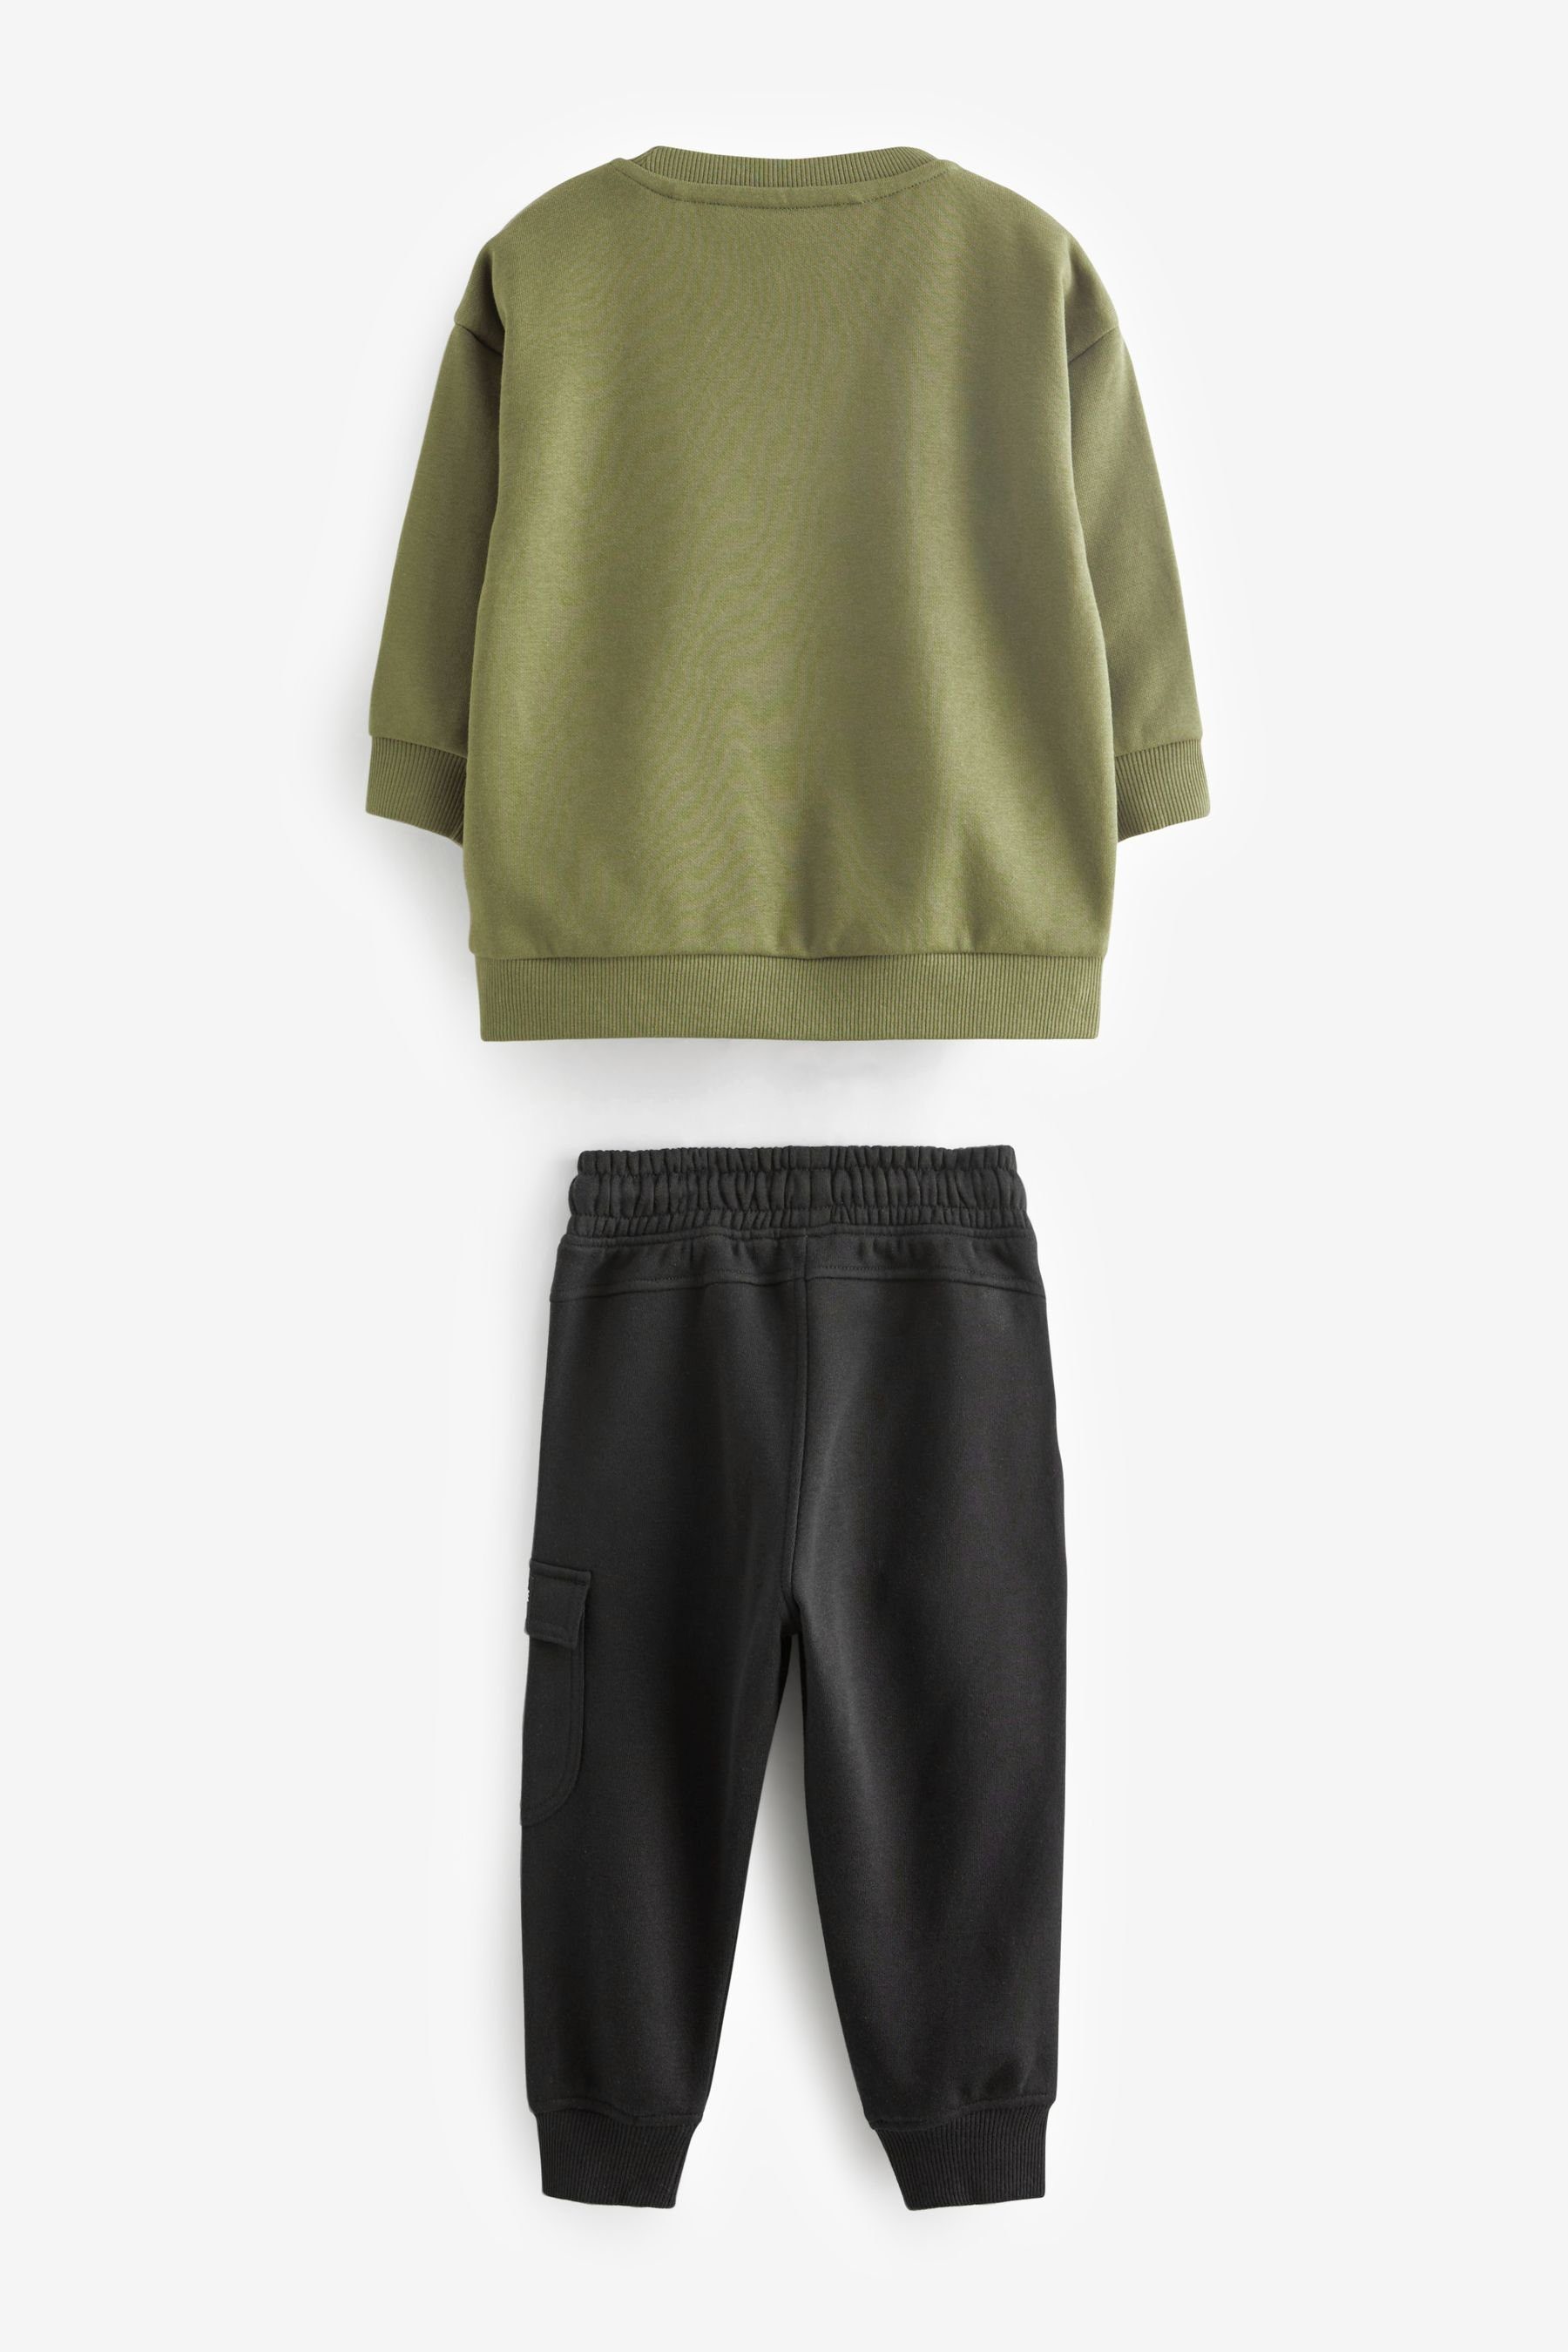 Drippy Bear im (2-tlg) Next und Jogginghose Sweatanzug Set Green/Black Motiv Khaki Sweatshirt mit